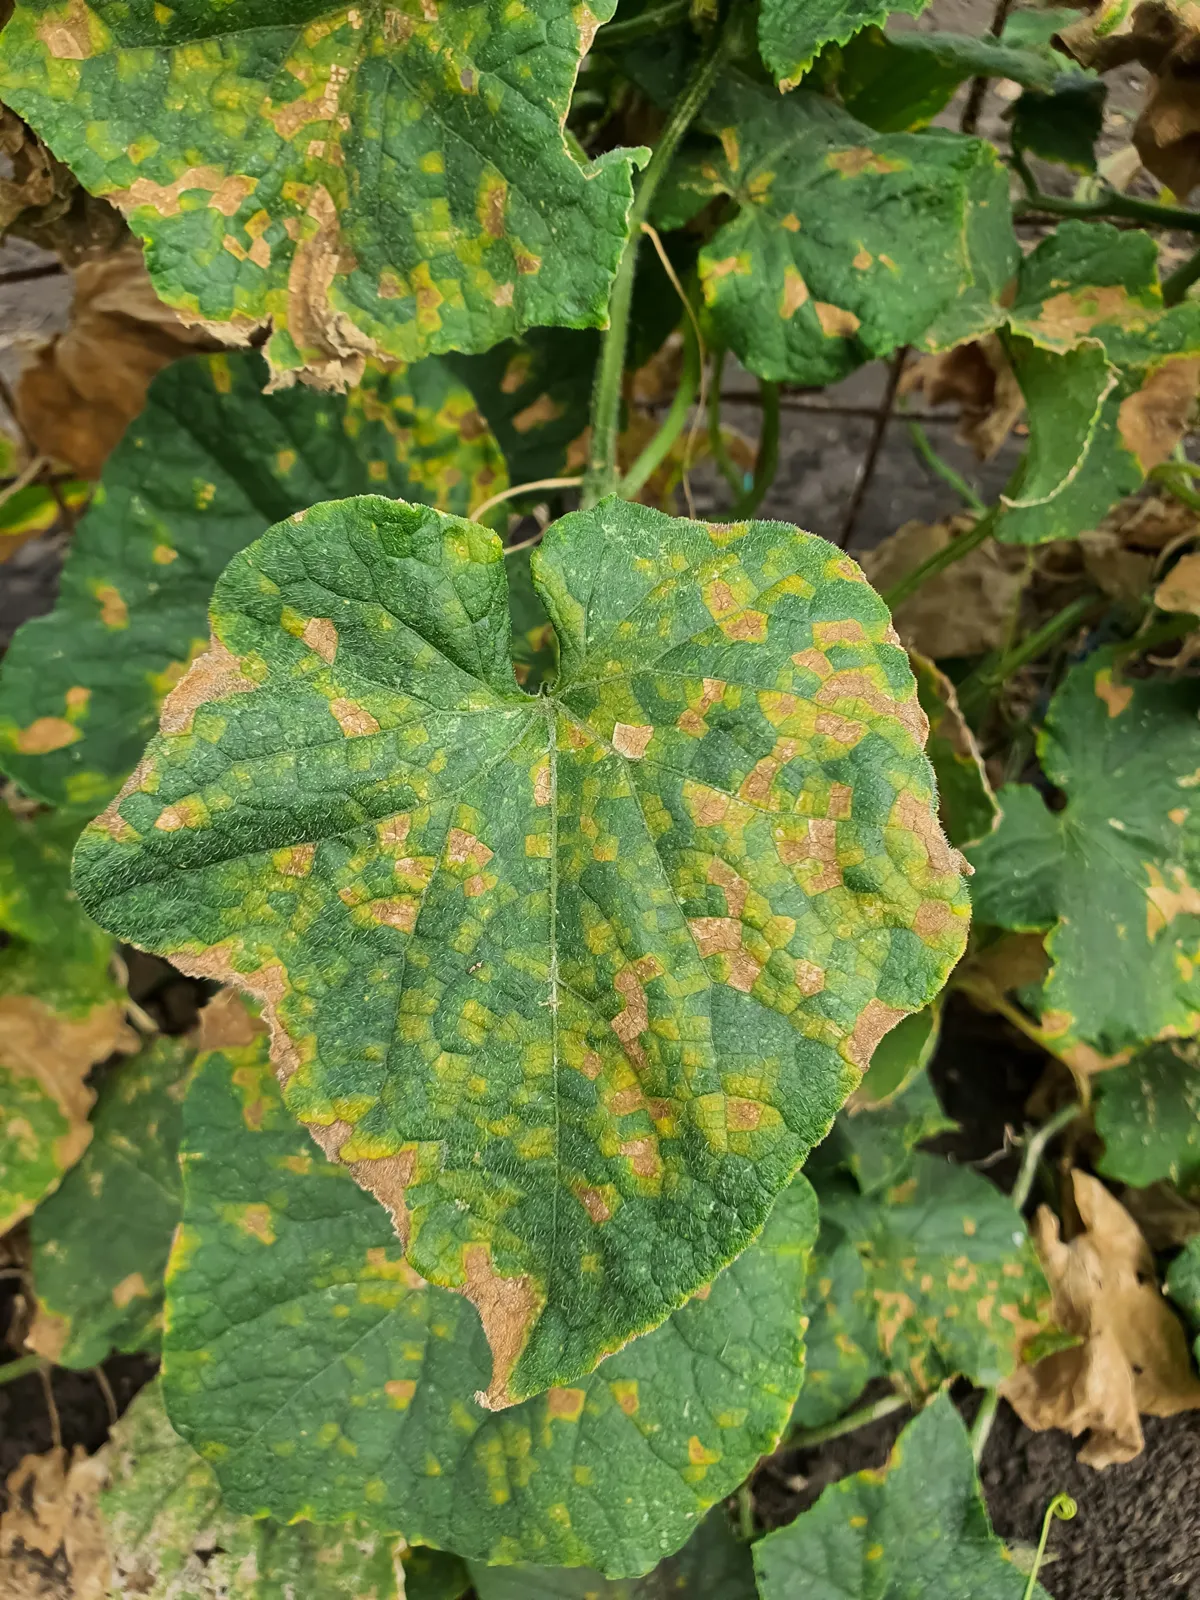 Cucumber leaves affected by downy mildew - Pseudoperonospora cubensis. Plant leaf disease. Cucumber disease.